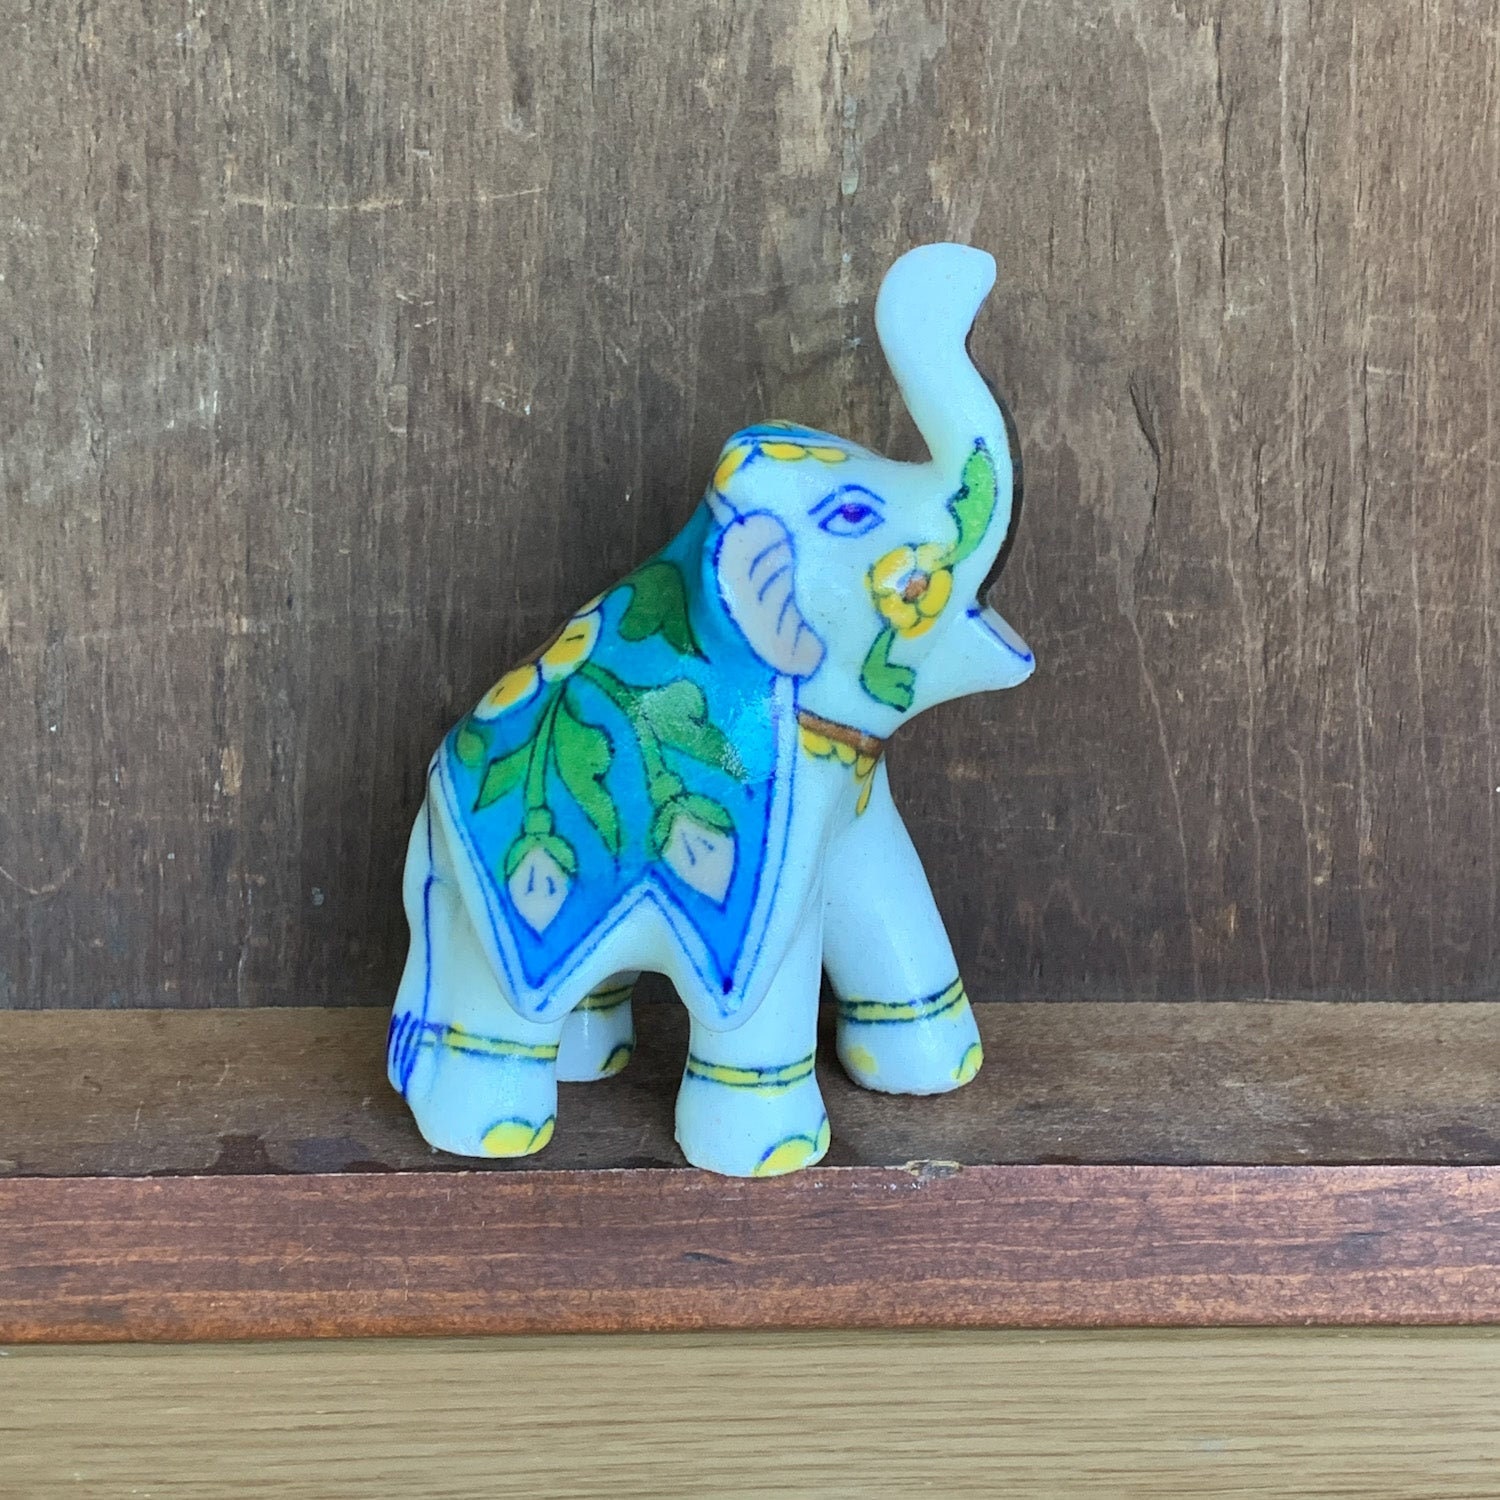 Pair of Handmade Decorative Blue Pottery Ceramic Elephant Figurine